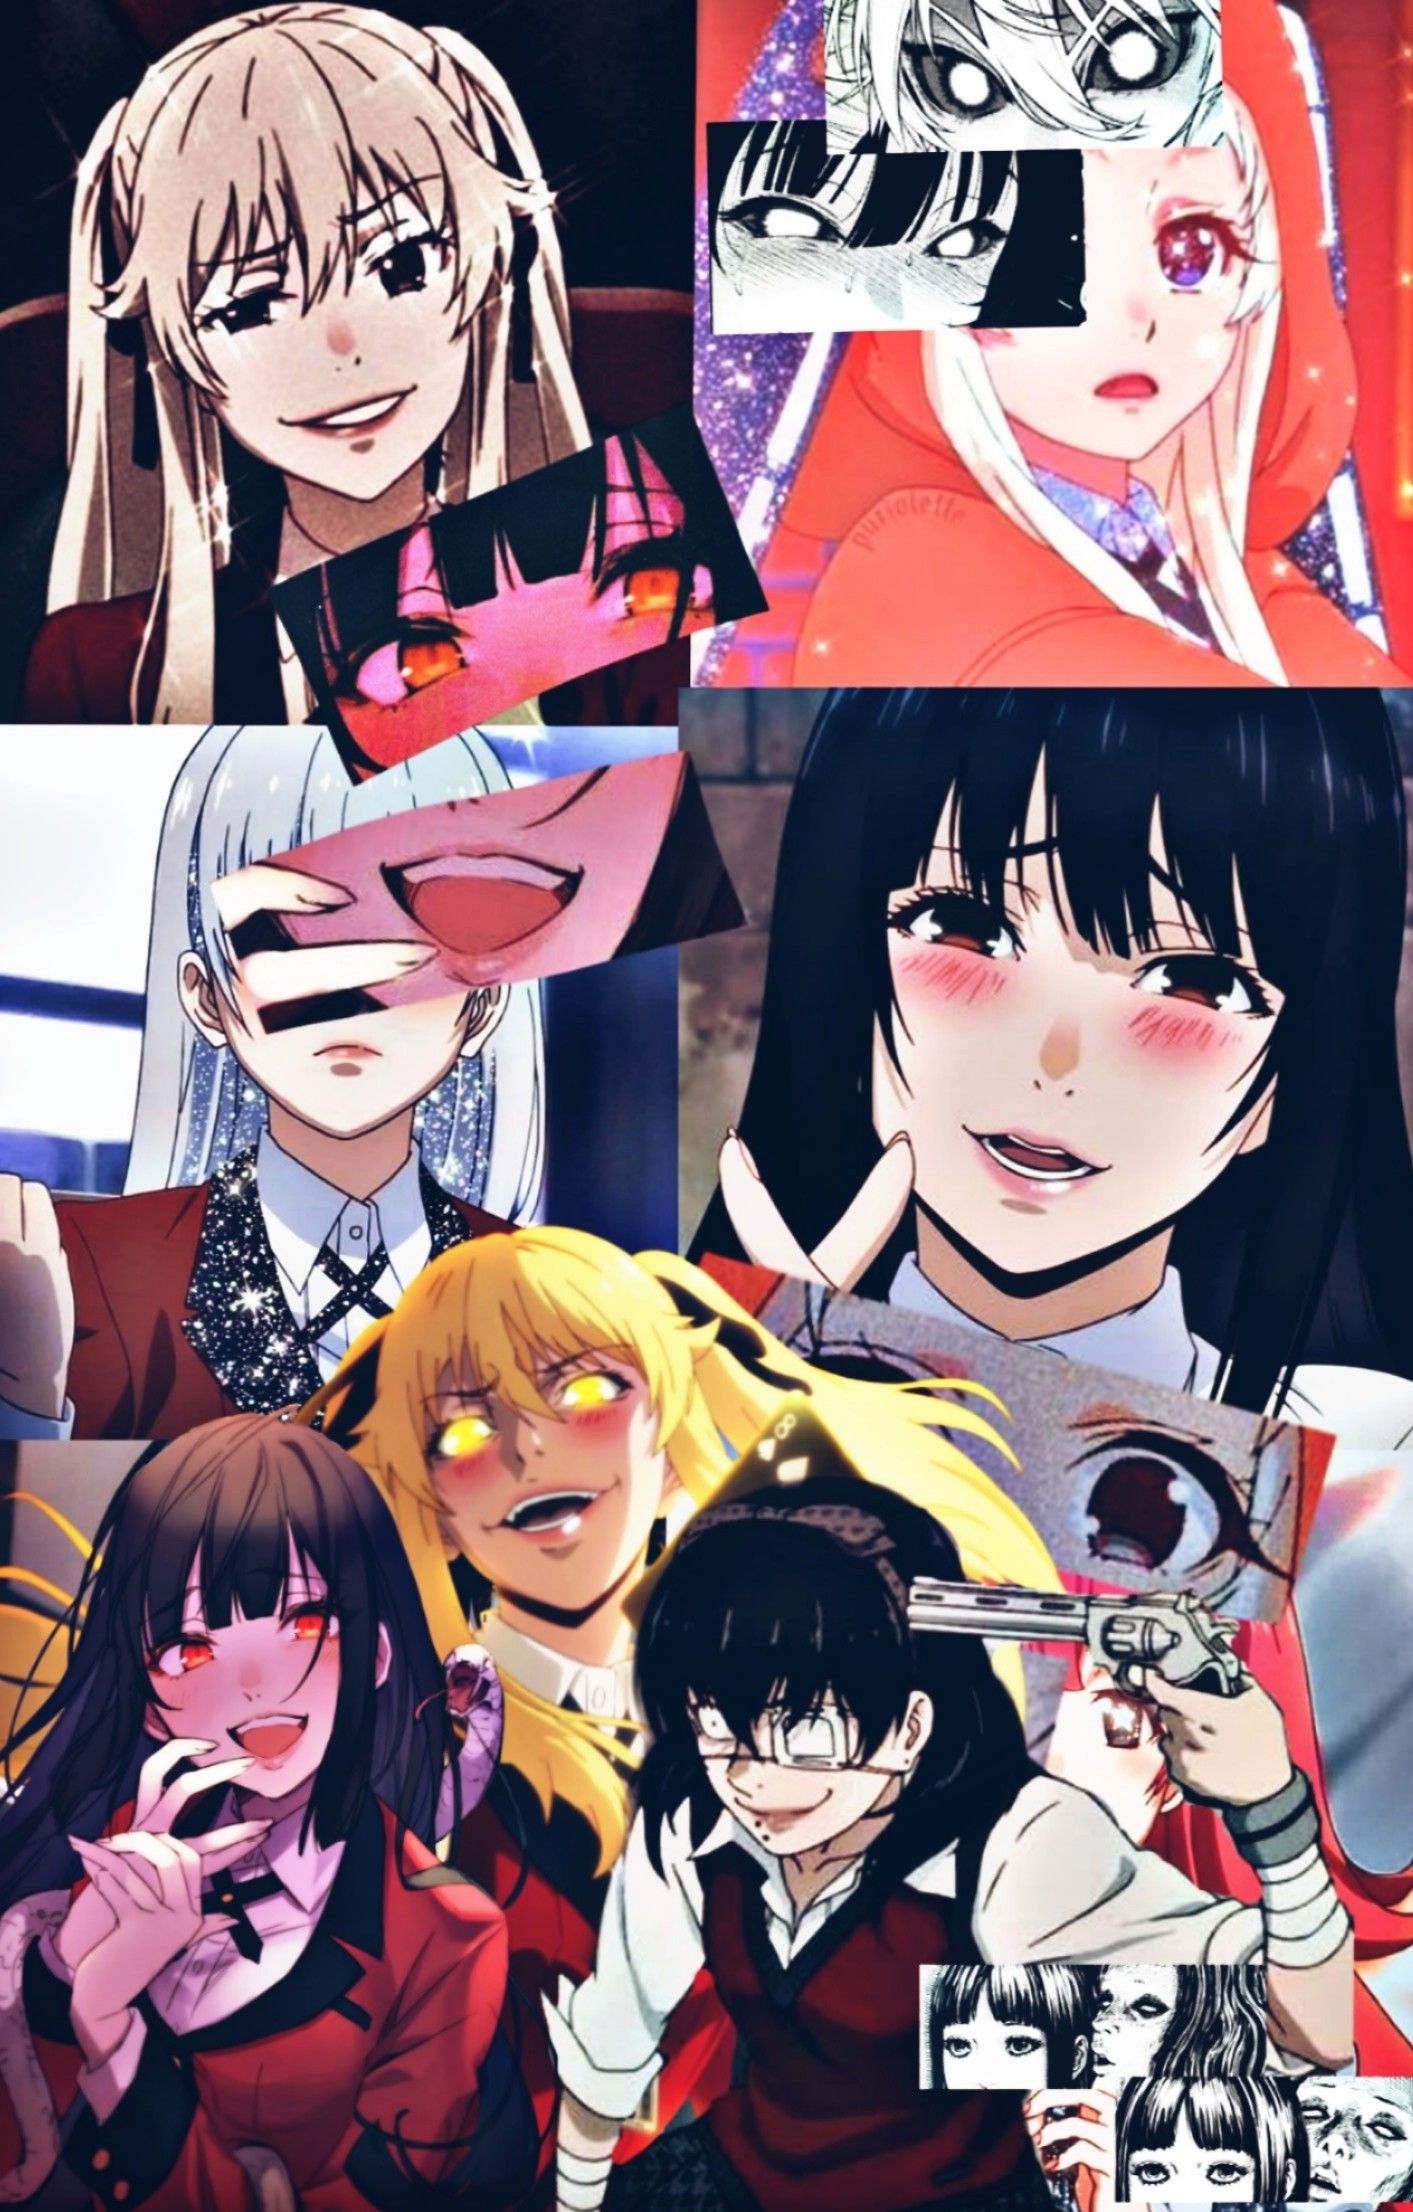 Wallpaper ID 430039  Anime Kakegurui Phone Wallpaper Yumeko Jabami  750x1334 free download